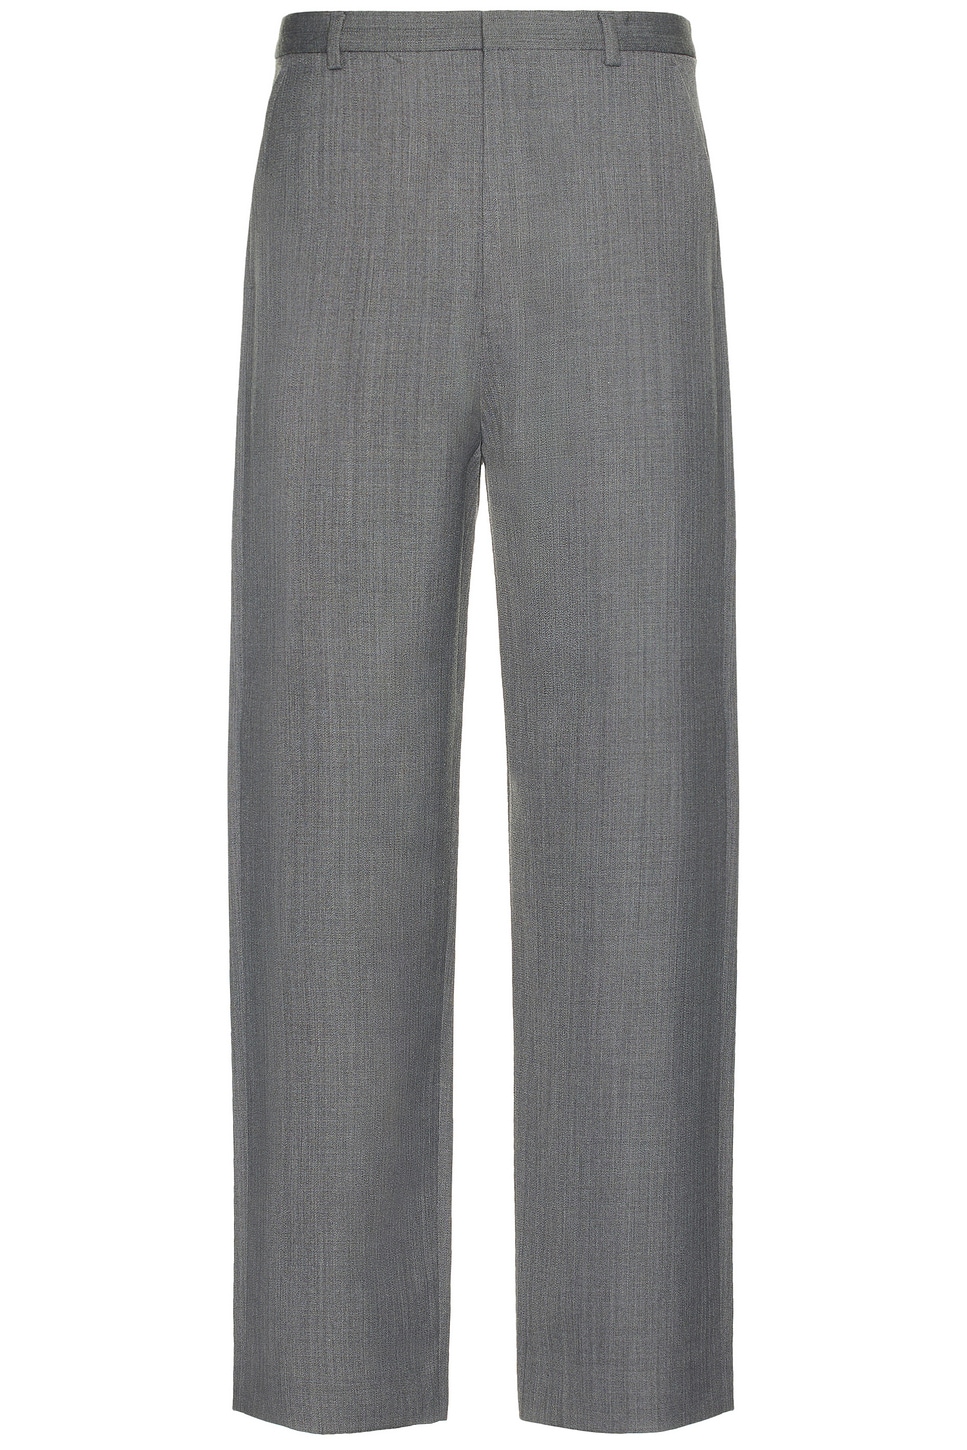 Image 1 of Acne Studios Suit Trouser in Grey Melange